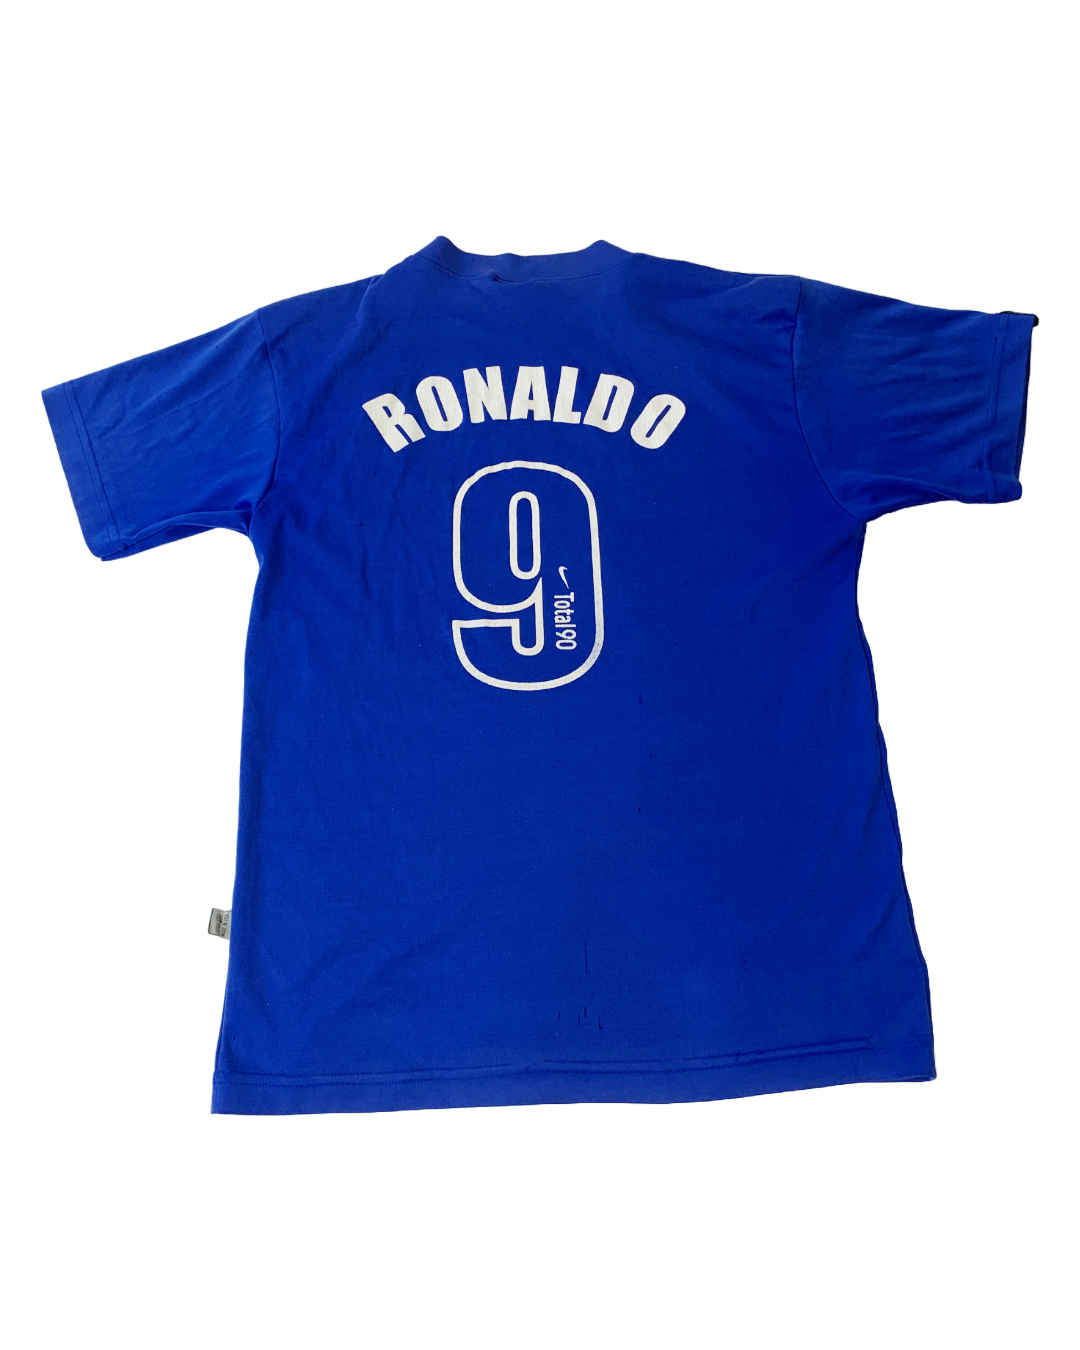 Total90 Nike Ronaldo Vintage Jersey - S